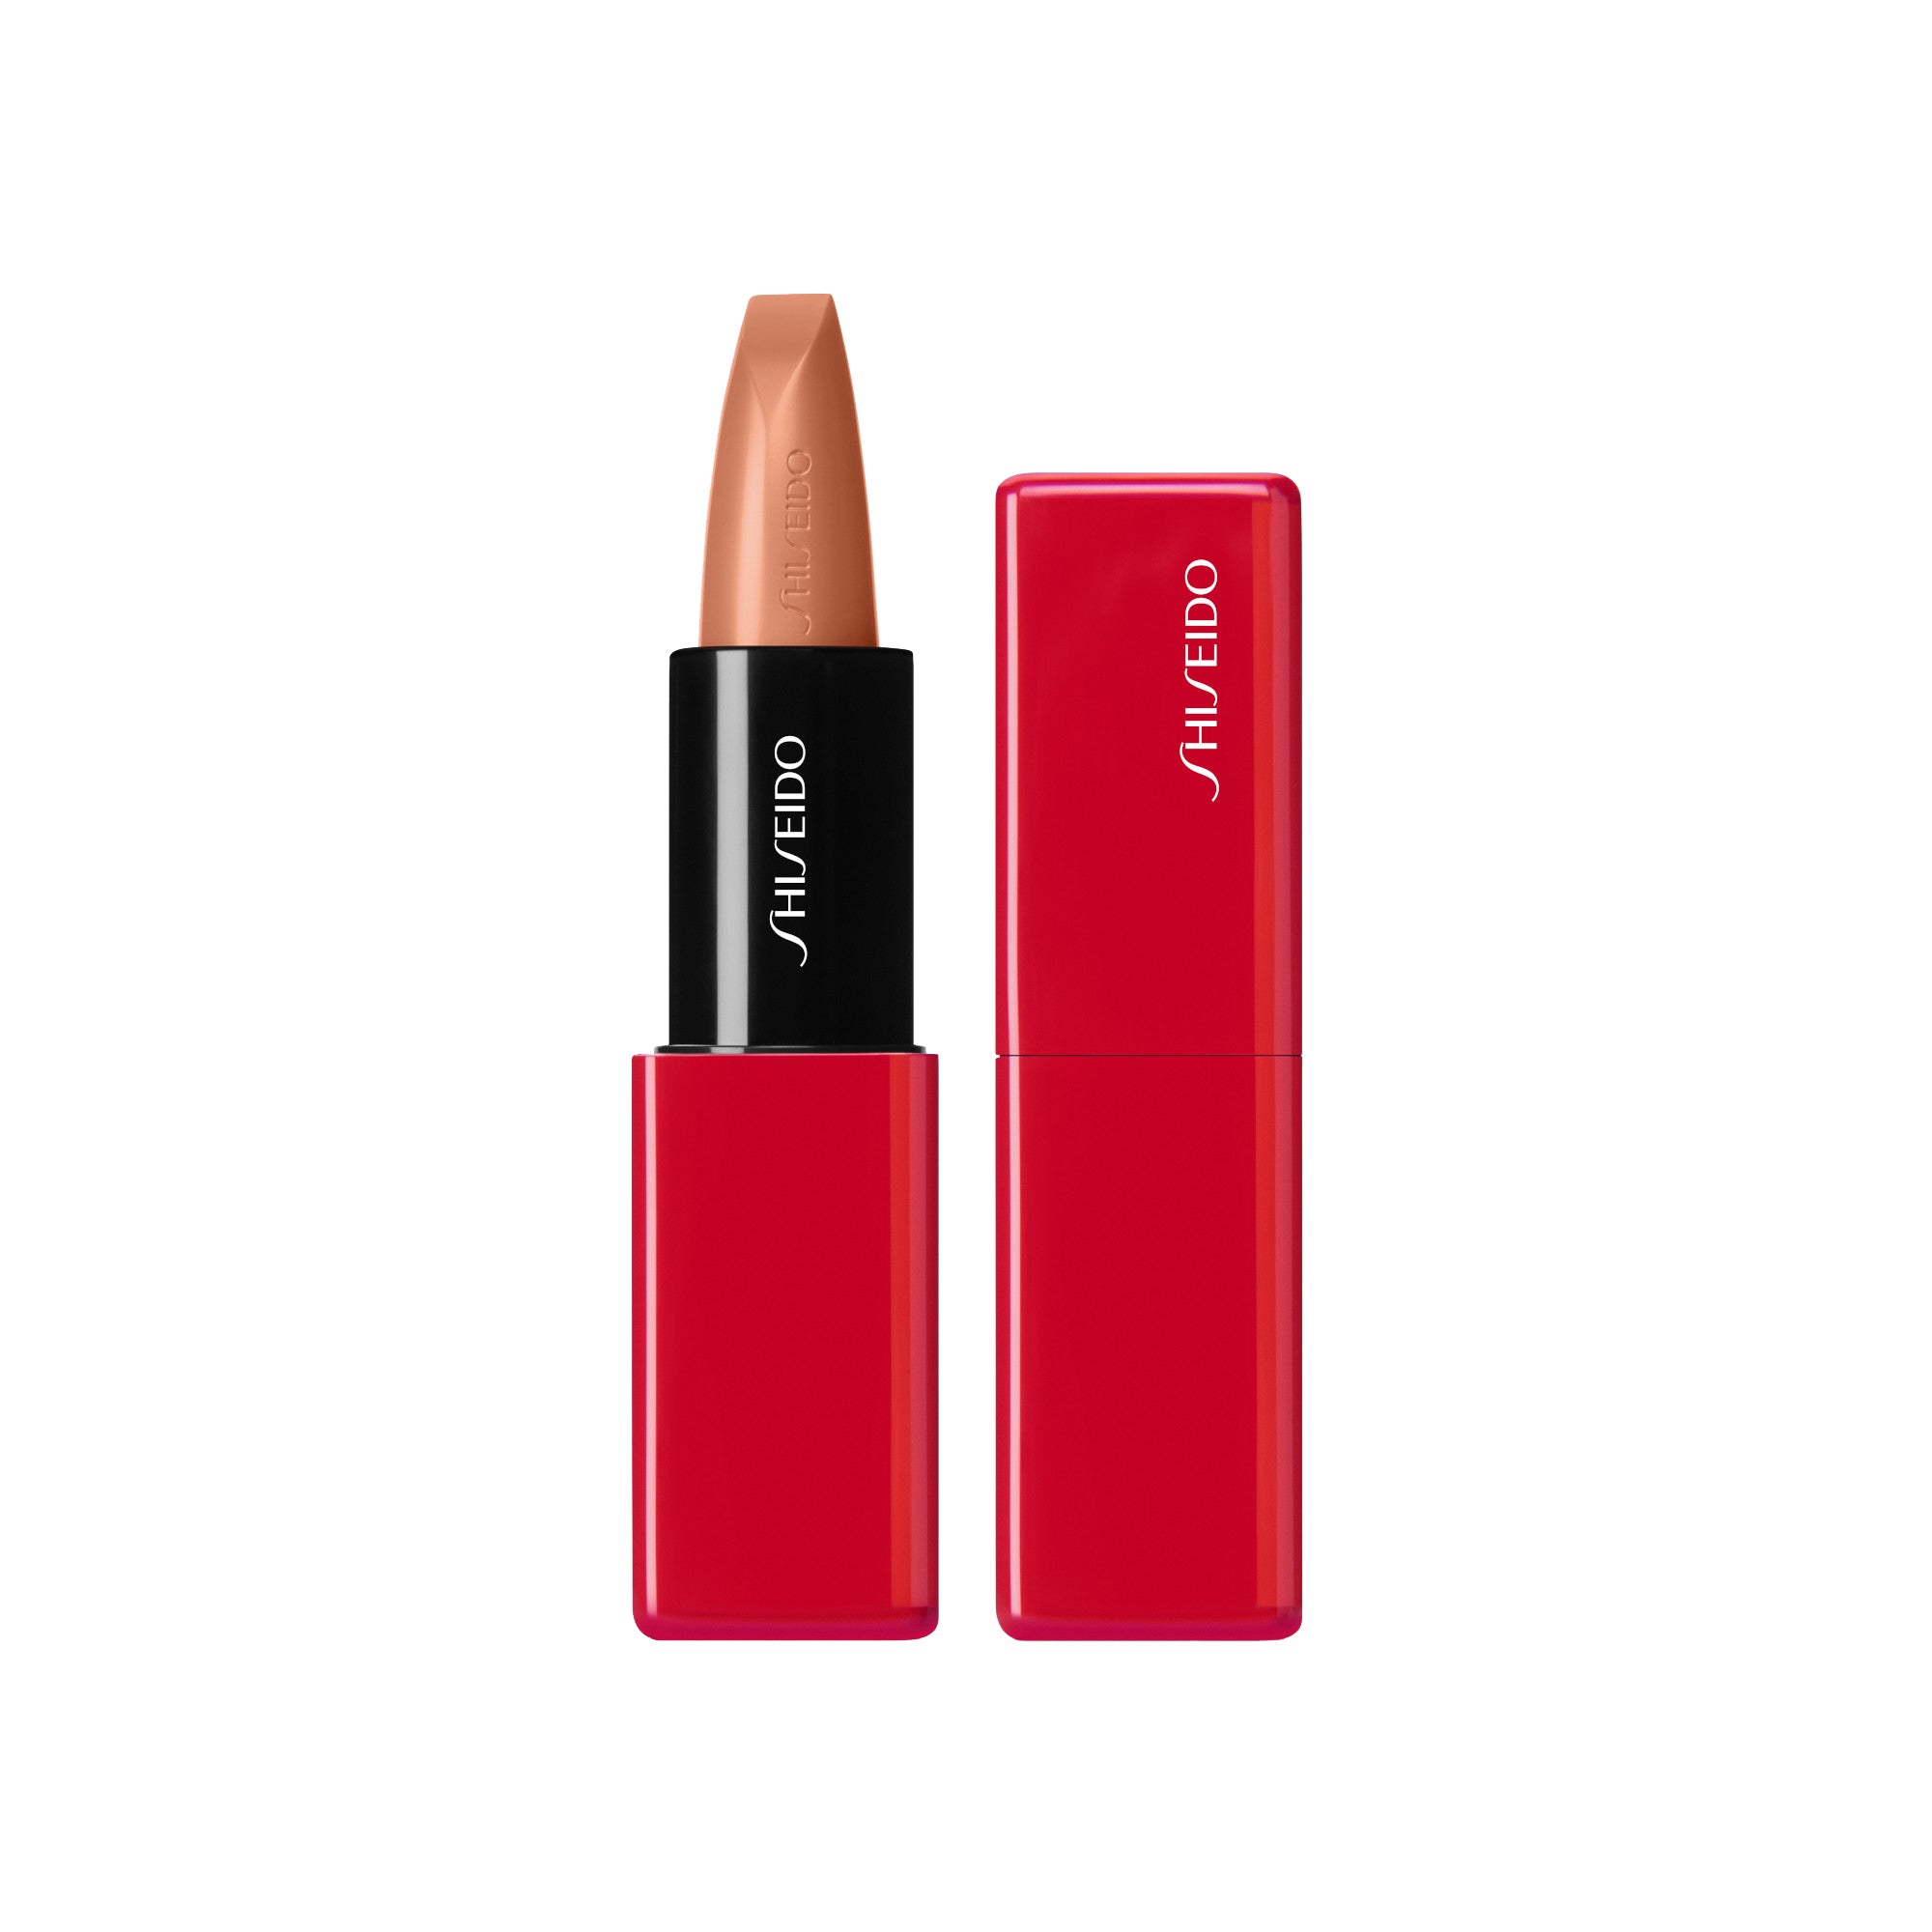 Shiseido TechnoSatin Long Lasting & Hydrating Gel Lipstick augmented nude